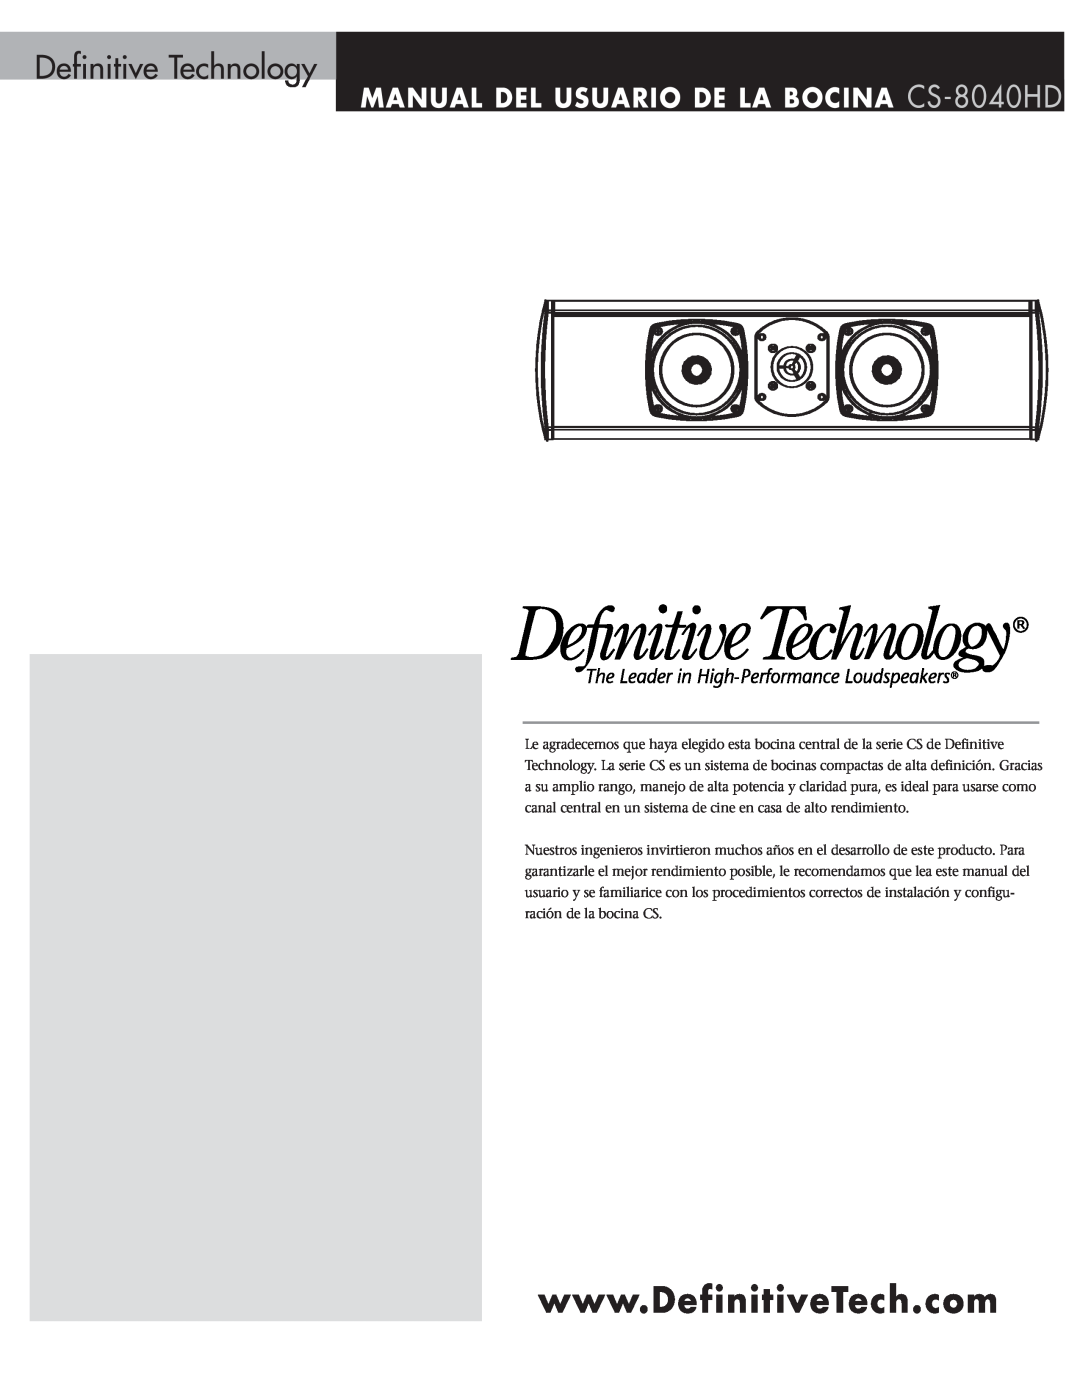 Definitive Technology owner manual Definitive Technology, MANUAL DEL USUARIO DE LA BOCINA CS-8040HD 